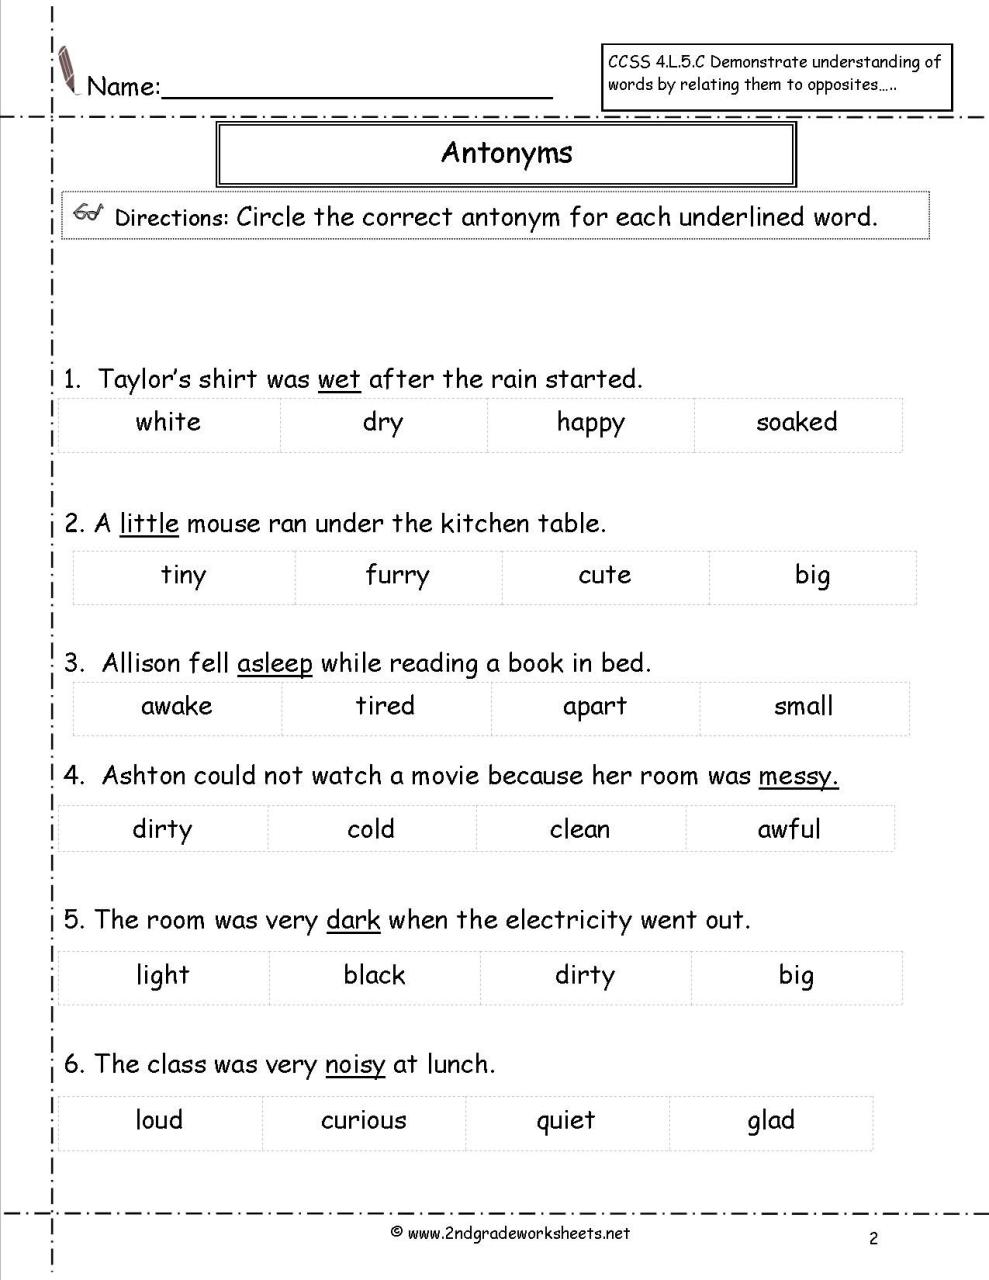 Antonyms Worksheet 3rd Grade